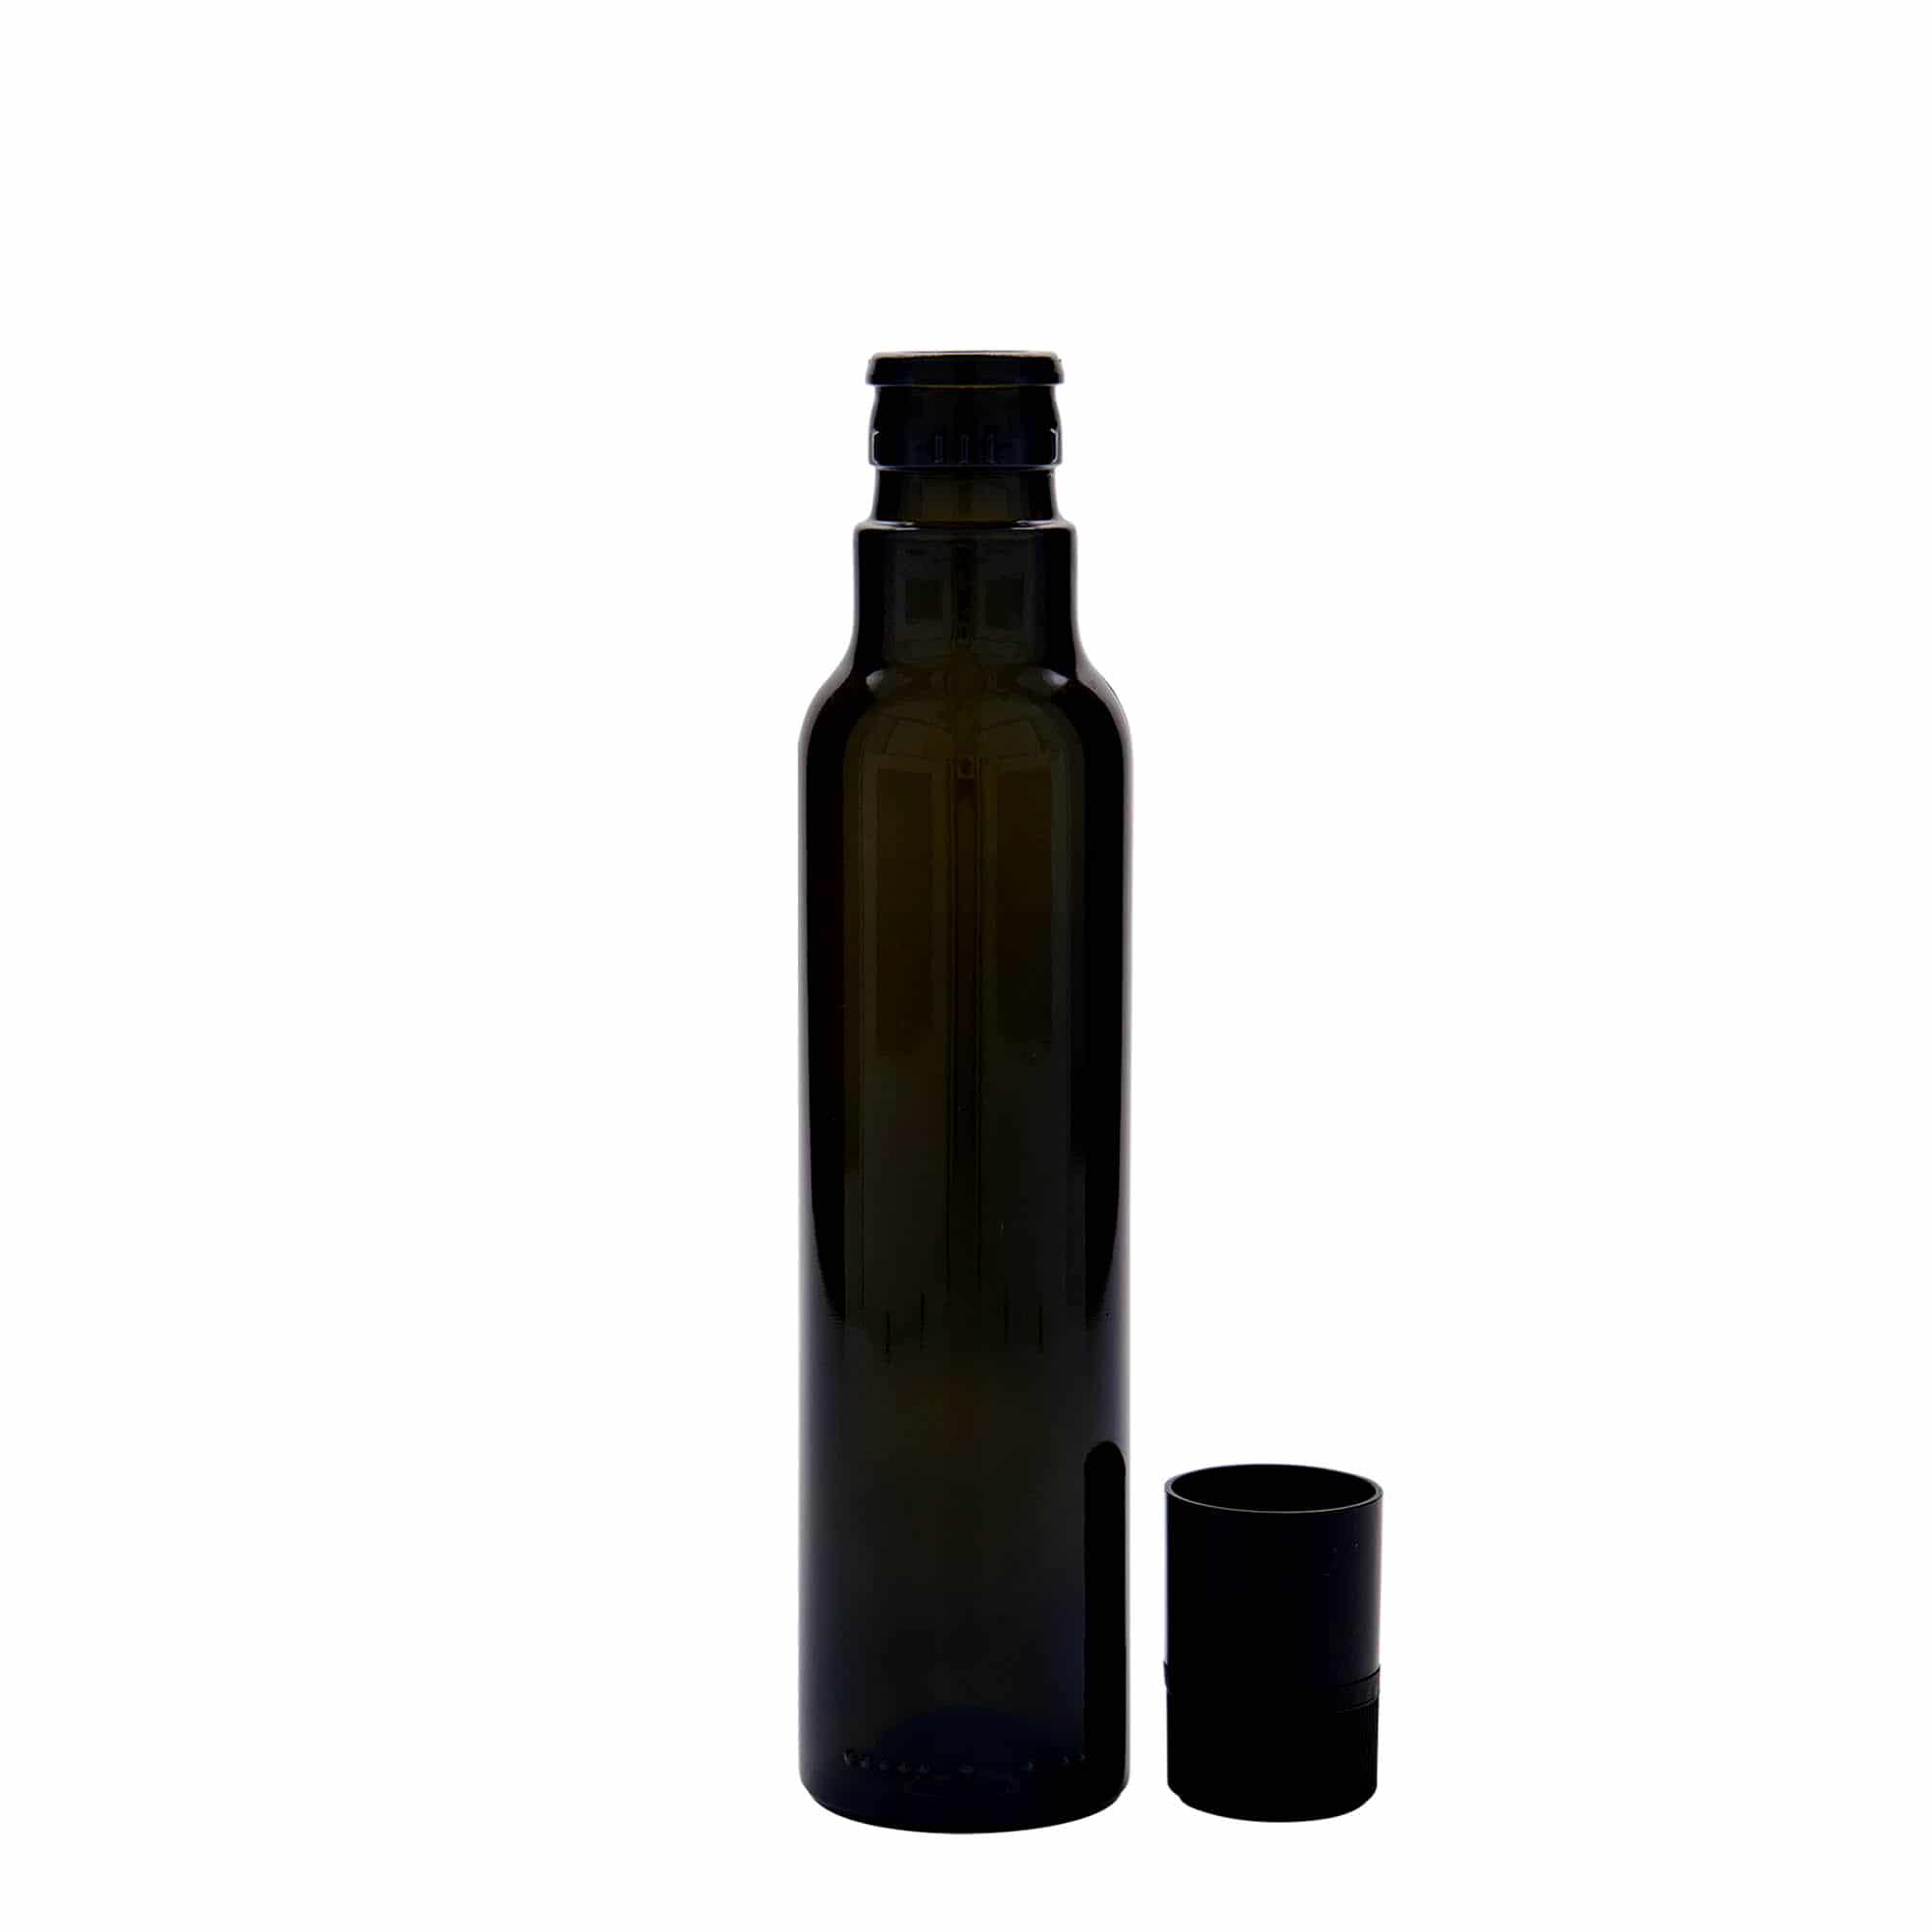 250 ml Bottiglia olio/aceto 'Willy New', vetro, verde antico, imboccatura: DOP